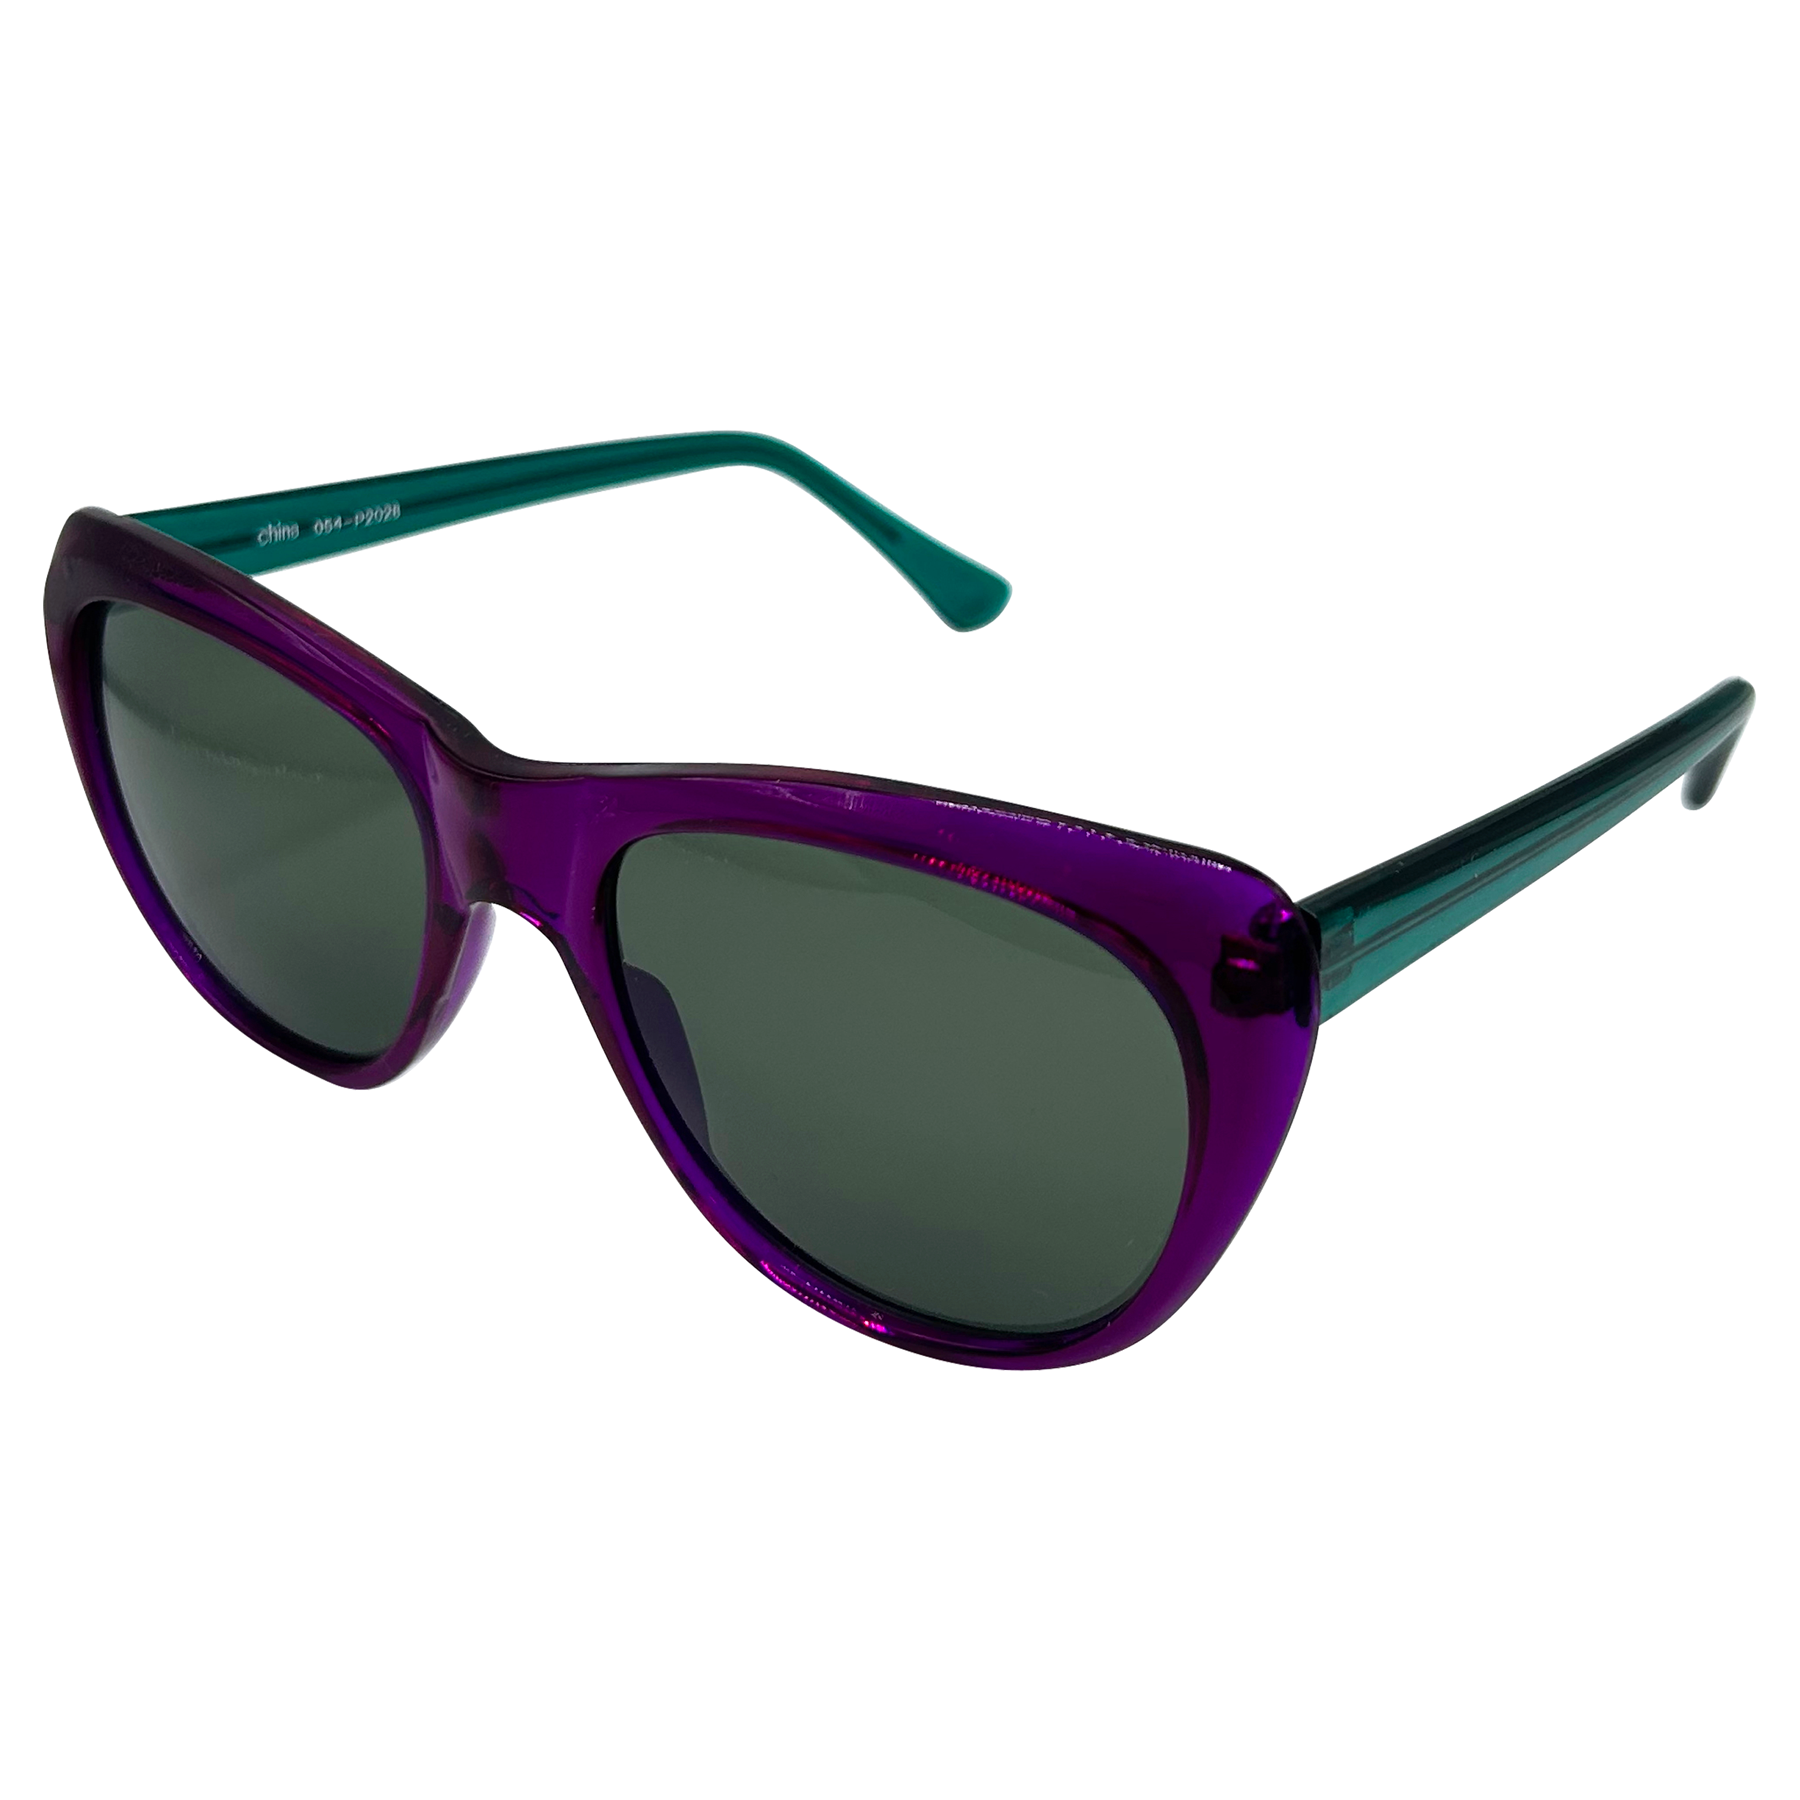 CHARMING Grape Cat-Eye Sunglasses